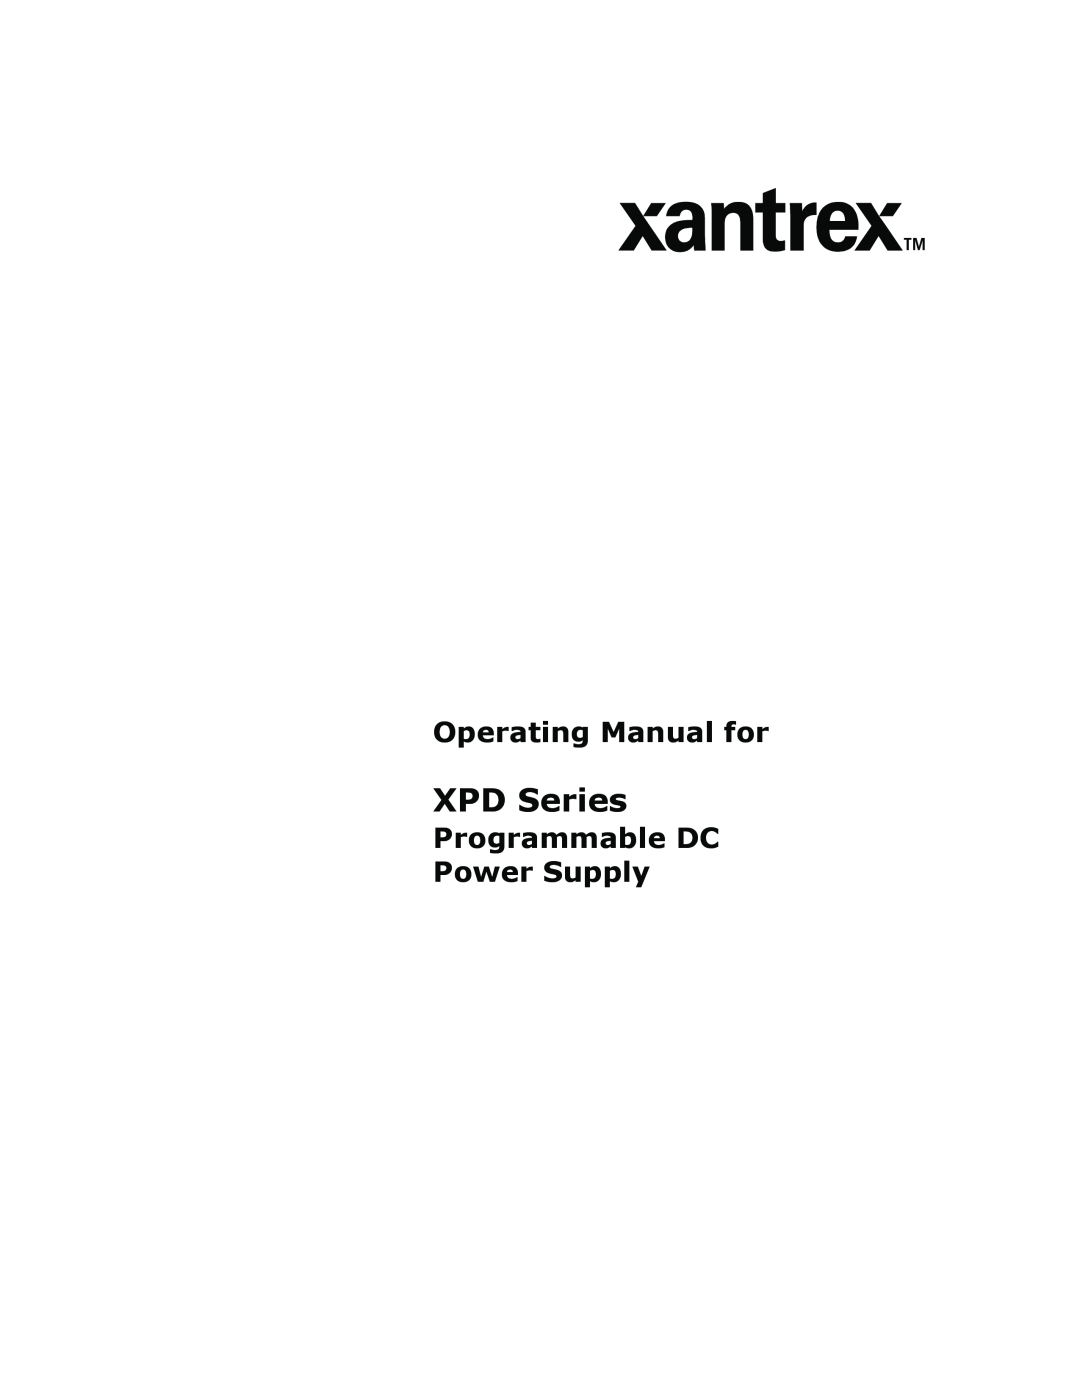 Xantrex Technology XPD 33-16, XPD 60-9, XPD 7.5-67, XPD 18-30 XPD Series, Operating Manual for, Programmable DC Power Supply 